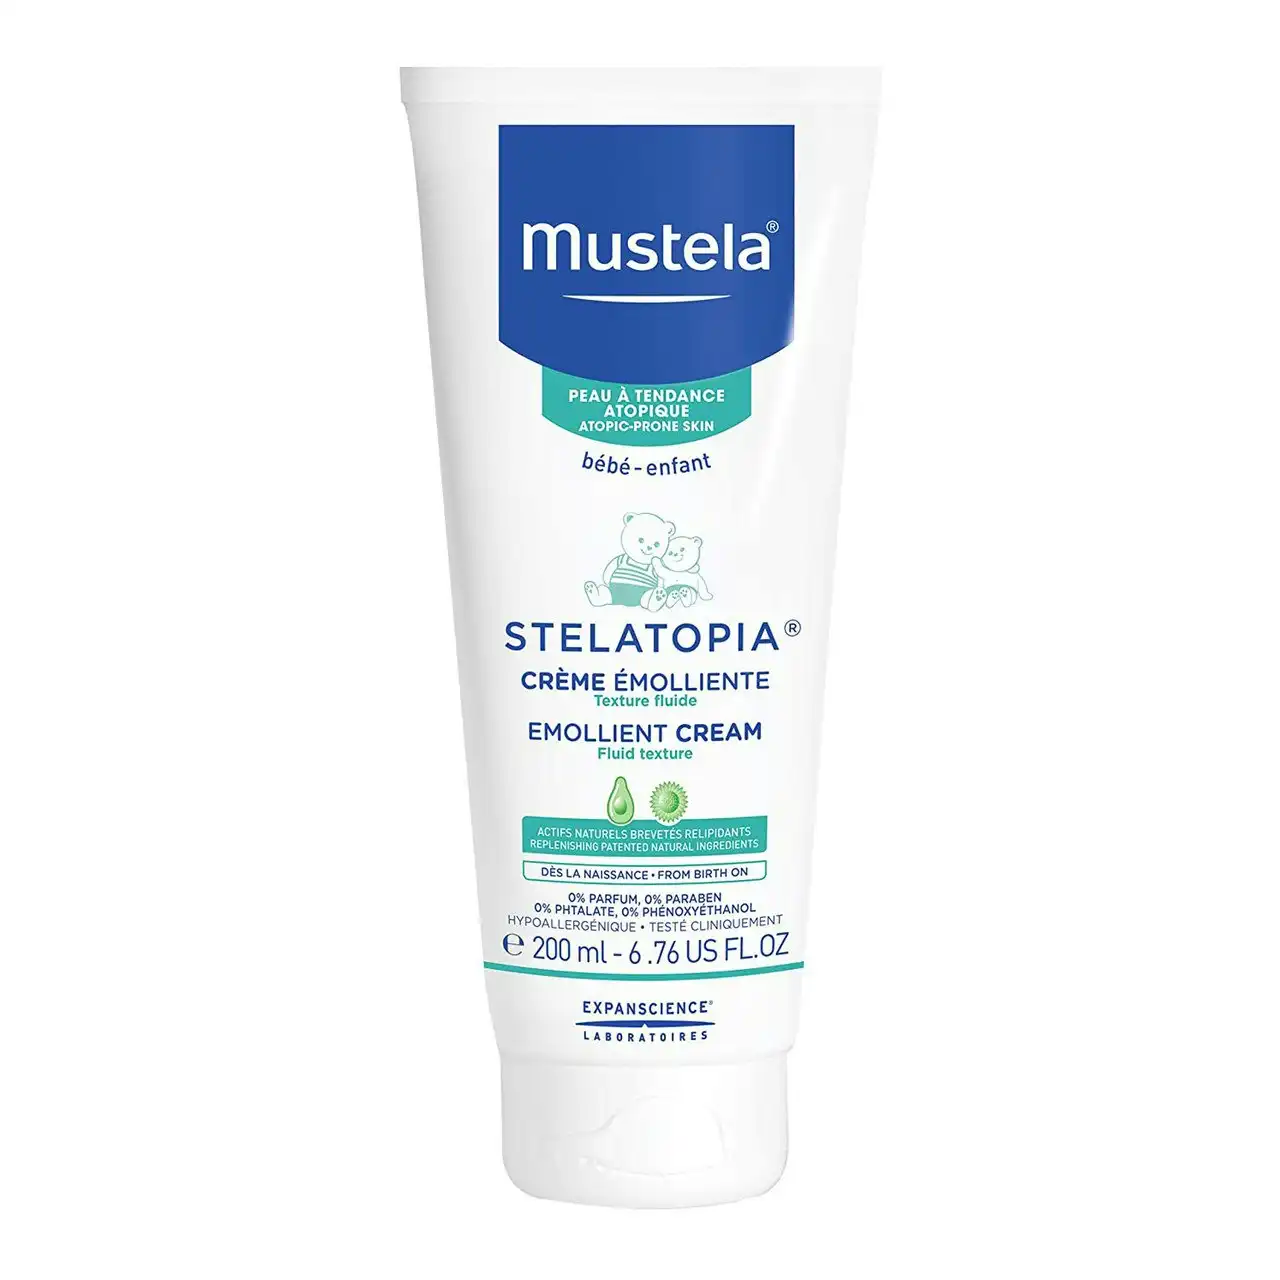 MUSTELA Stelatopia Emollient Cream - for eczema-prone skin - 200ml